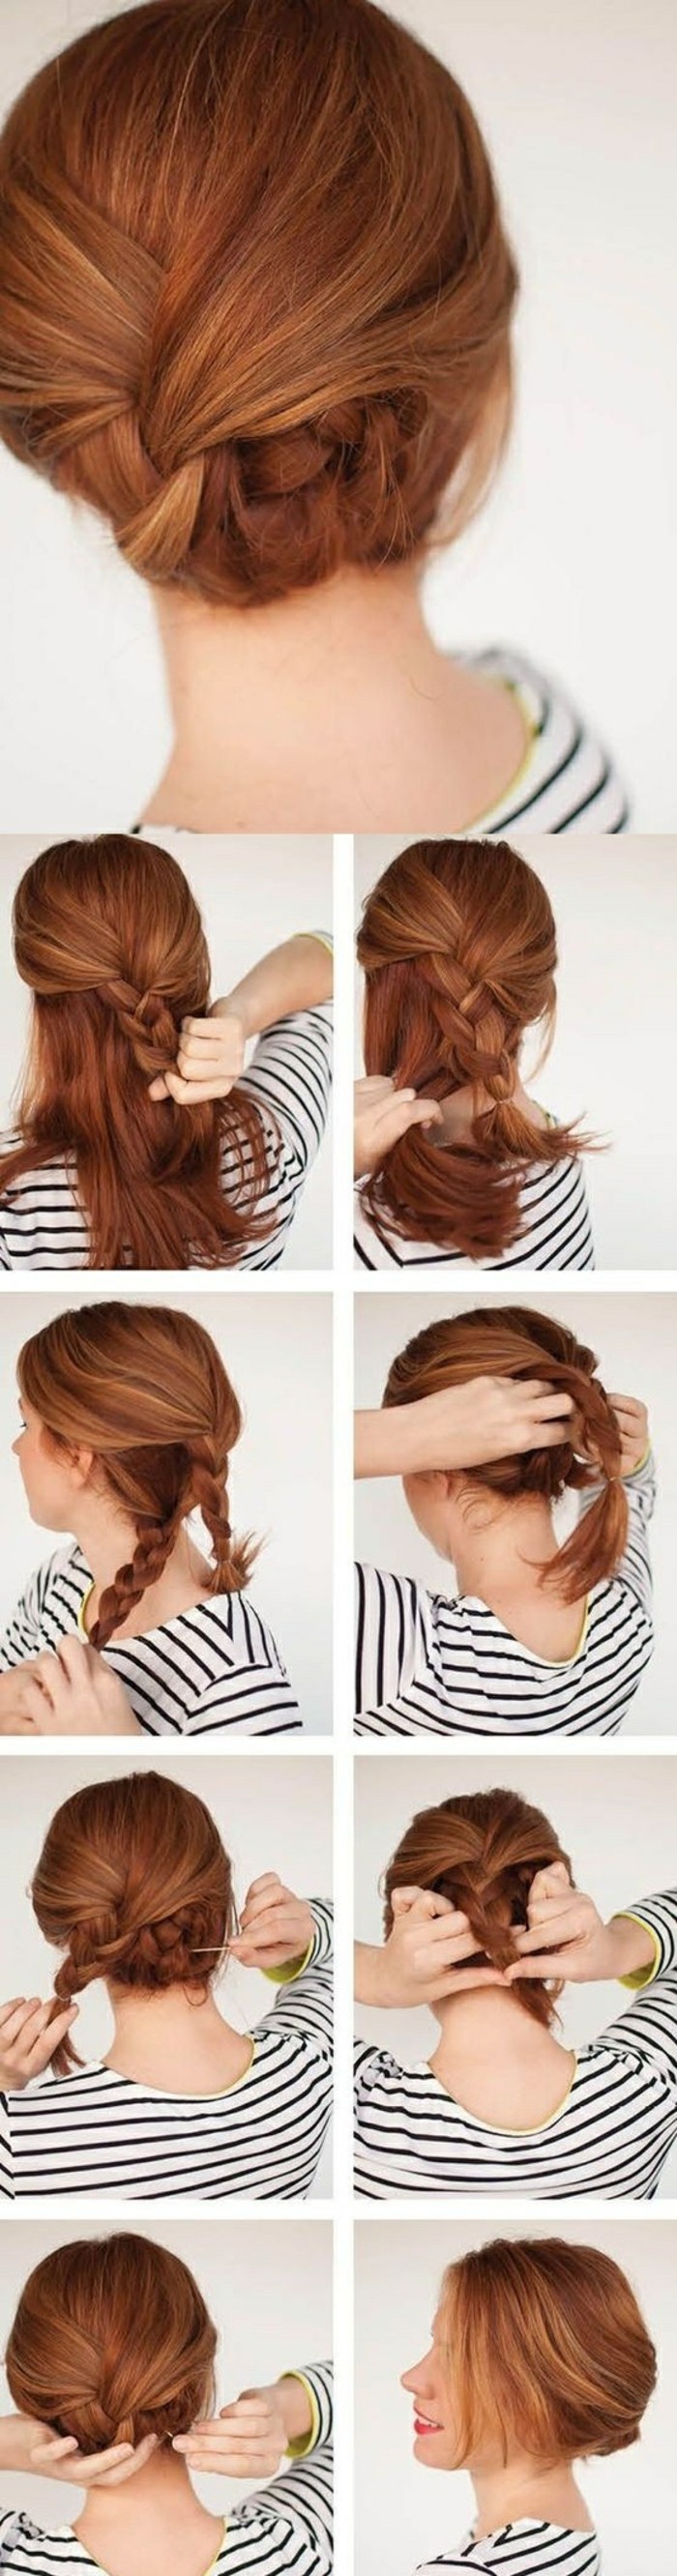 updo hairstyles-εγχειρίδιο-κόκκινο-μεσαίου μήκους μαλλιά-γυναίκα-πλεξίδα-tie-χτένισμα-yourself-make